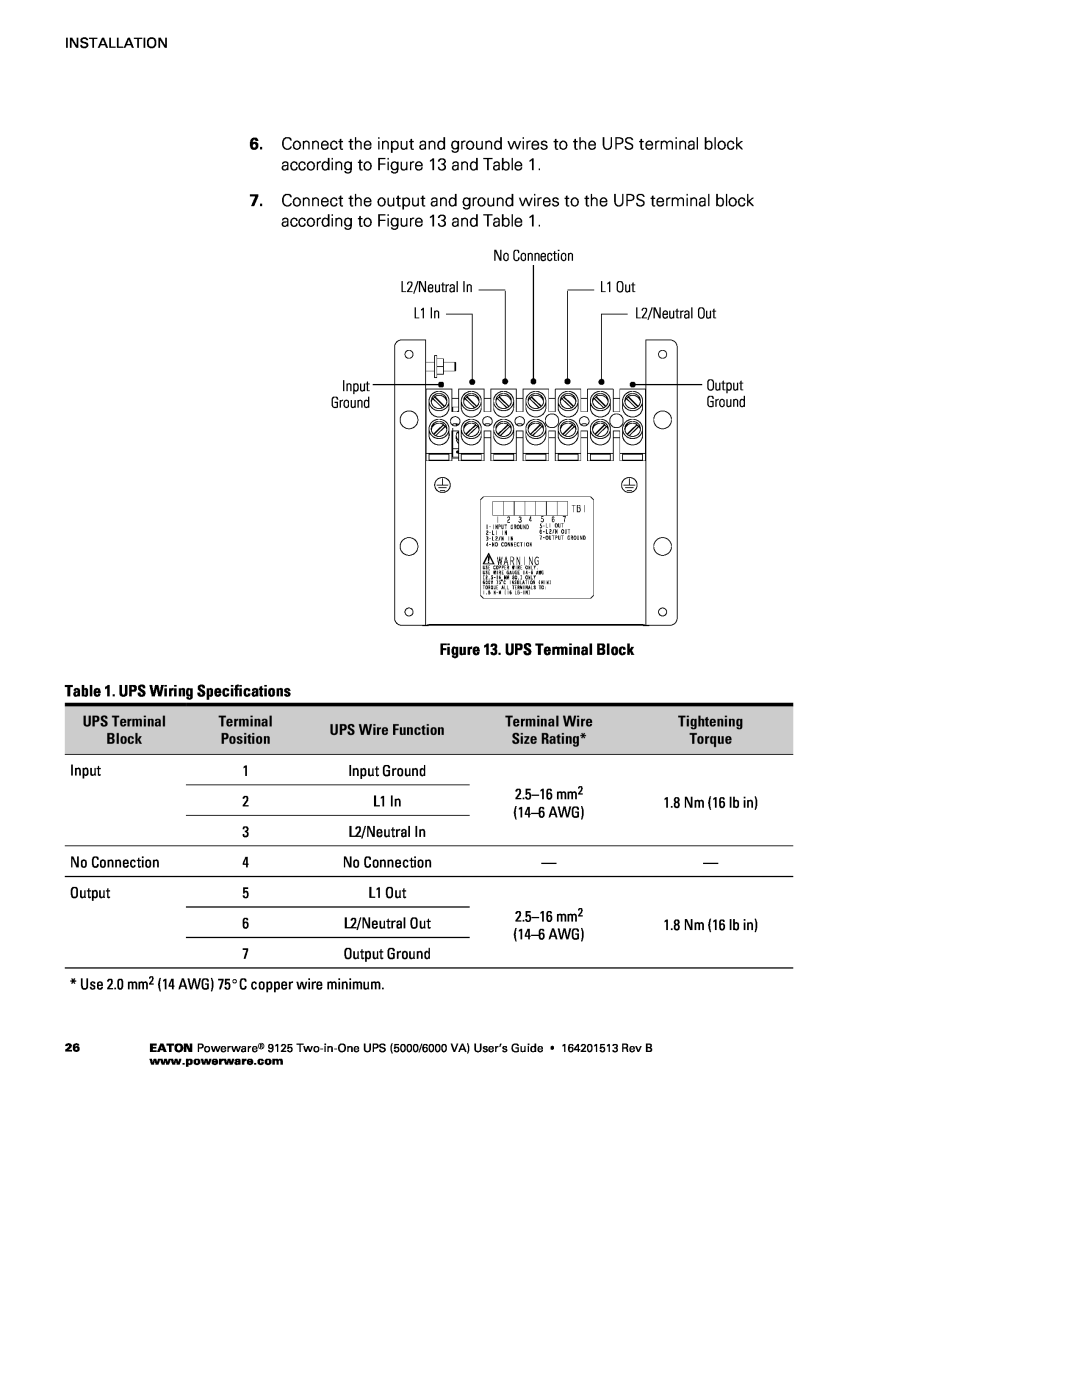 Powerware 5000, 6000 VA manual UPS Terminal Block, UPS Wiring Specifications, Tightening 